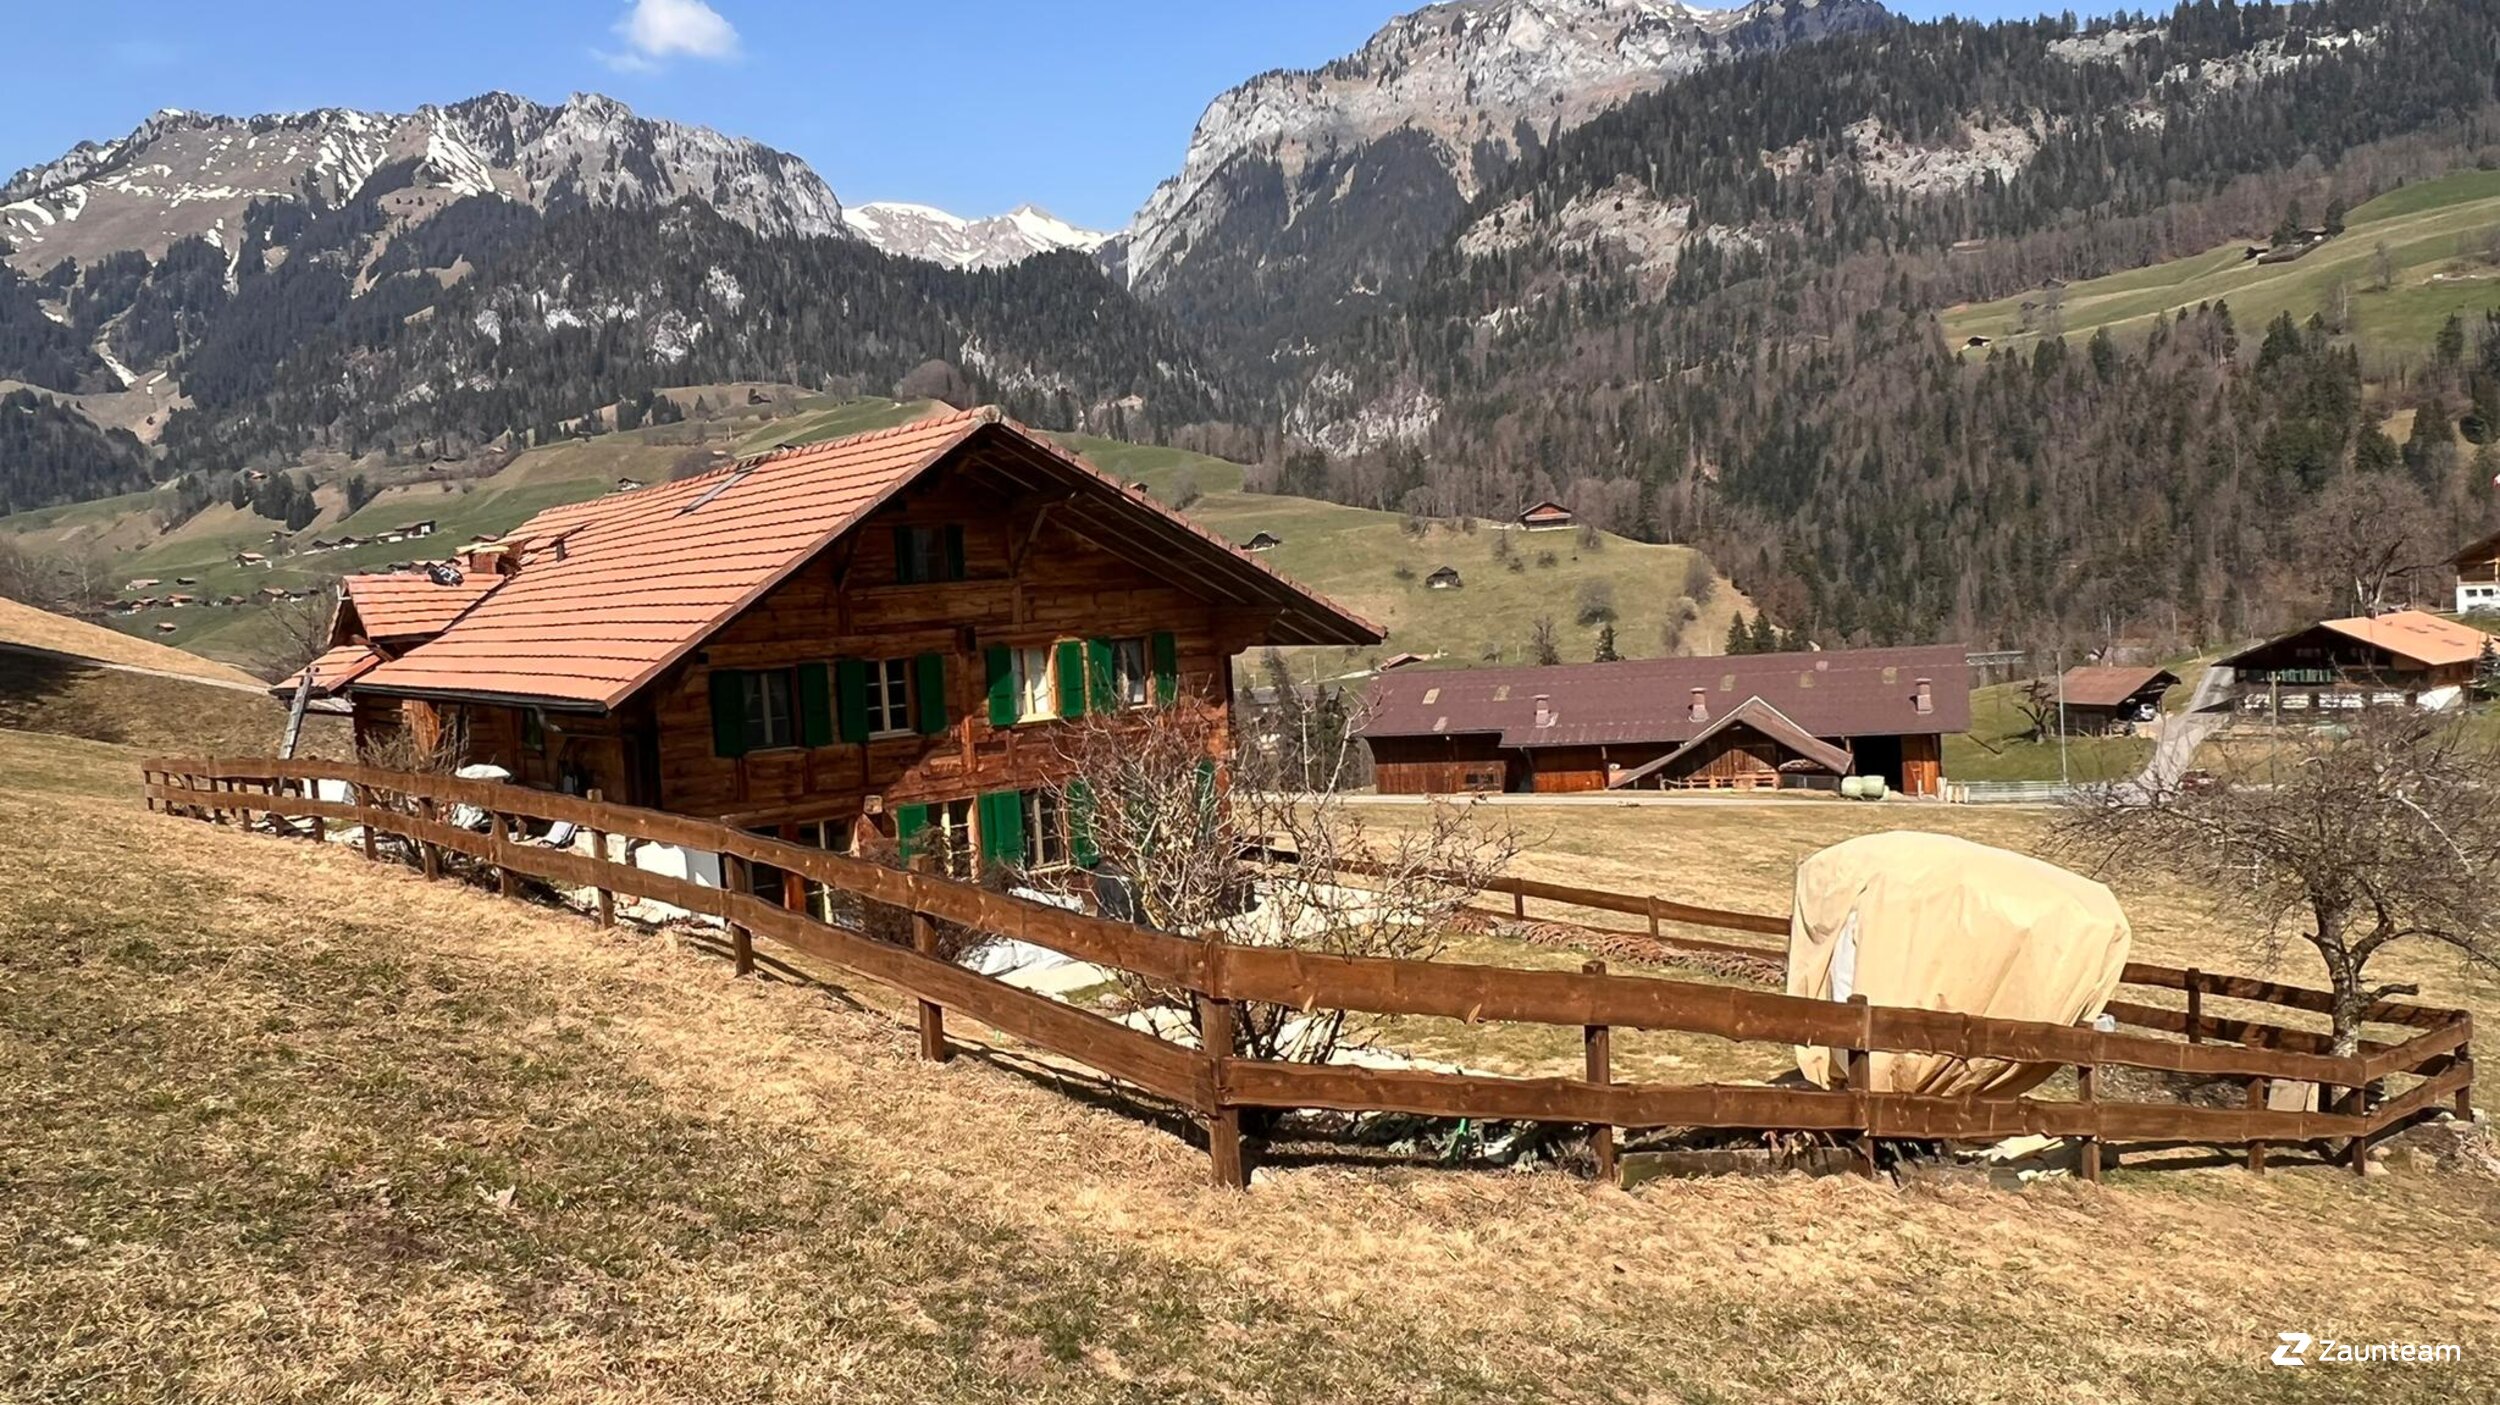 Clôture ranch de 2022 à 3764 Weissenburg Suisse de Zaunteam Berner Oberland.